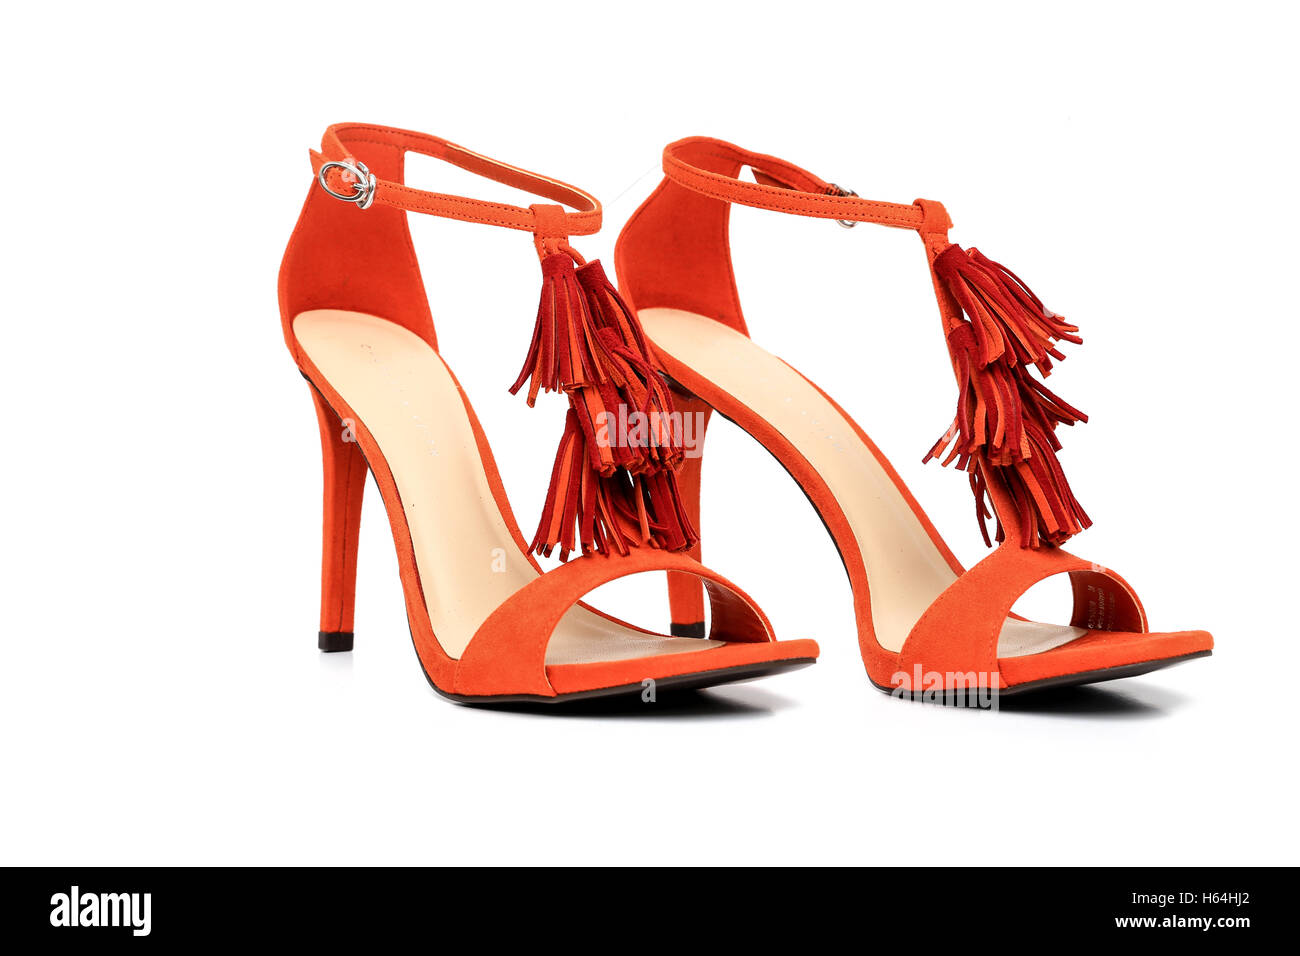 Ladies Shoes High Heels - Orange Color Stock Photo - Alamy